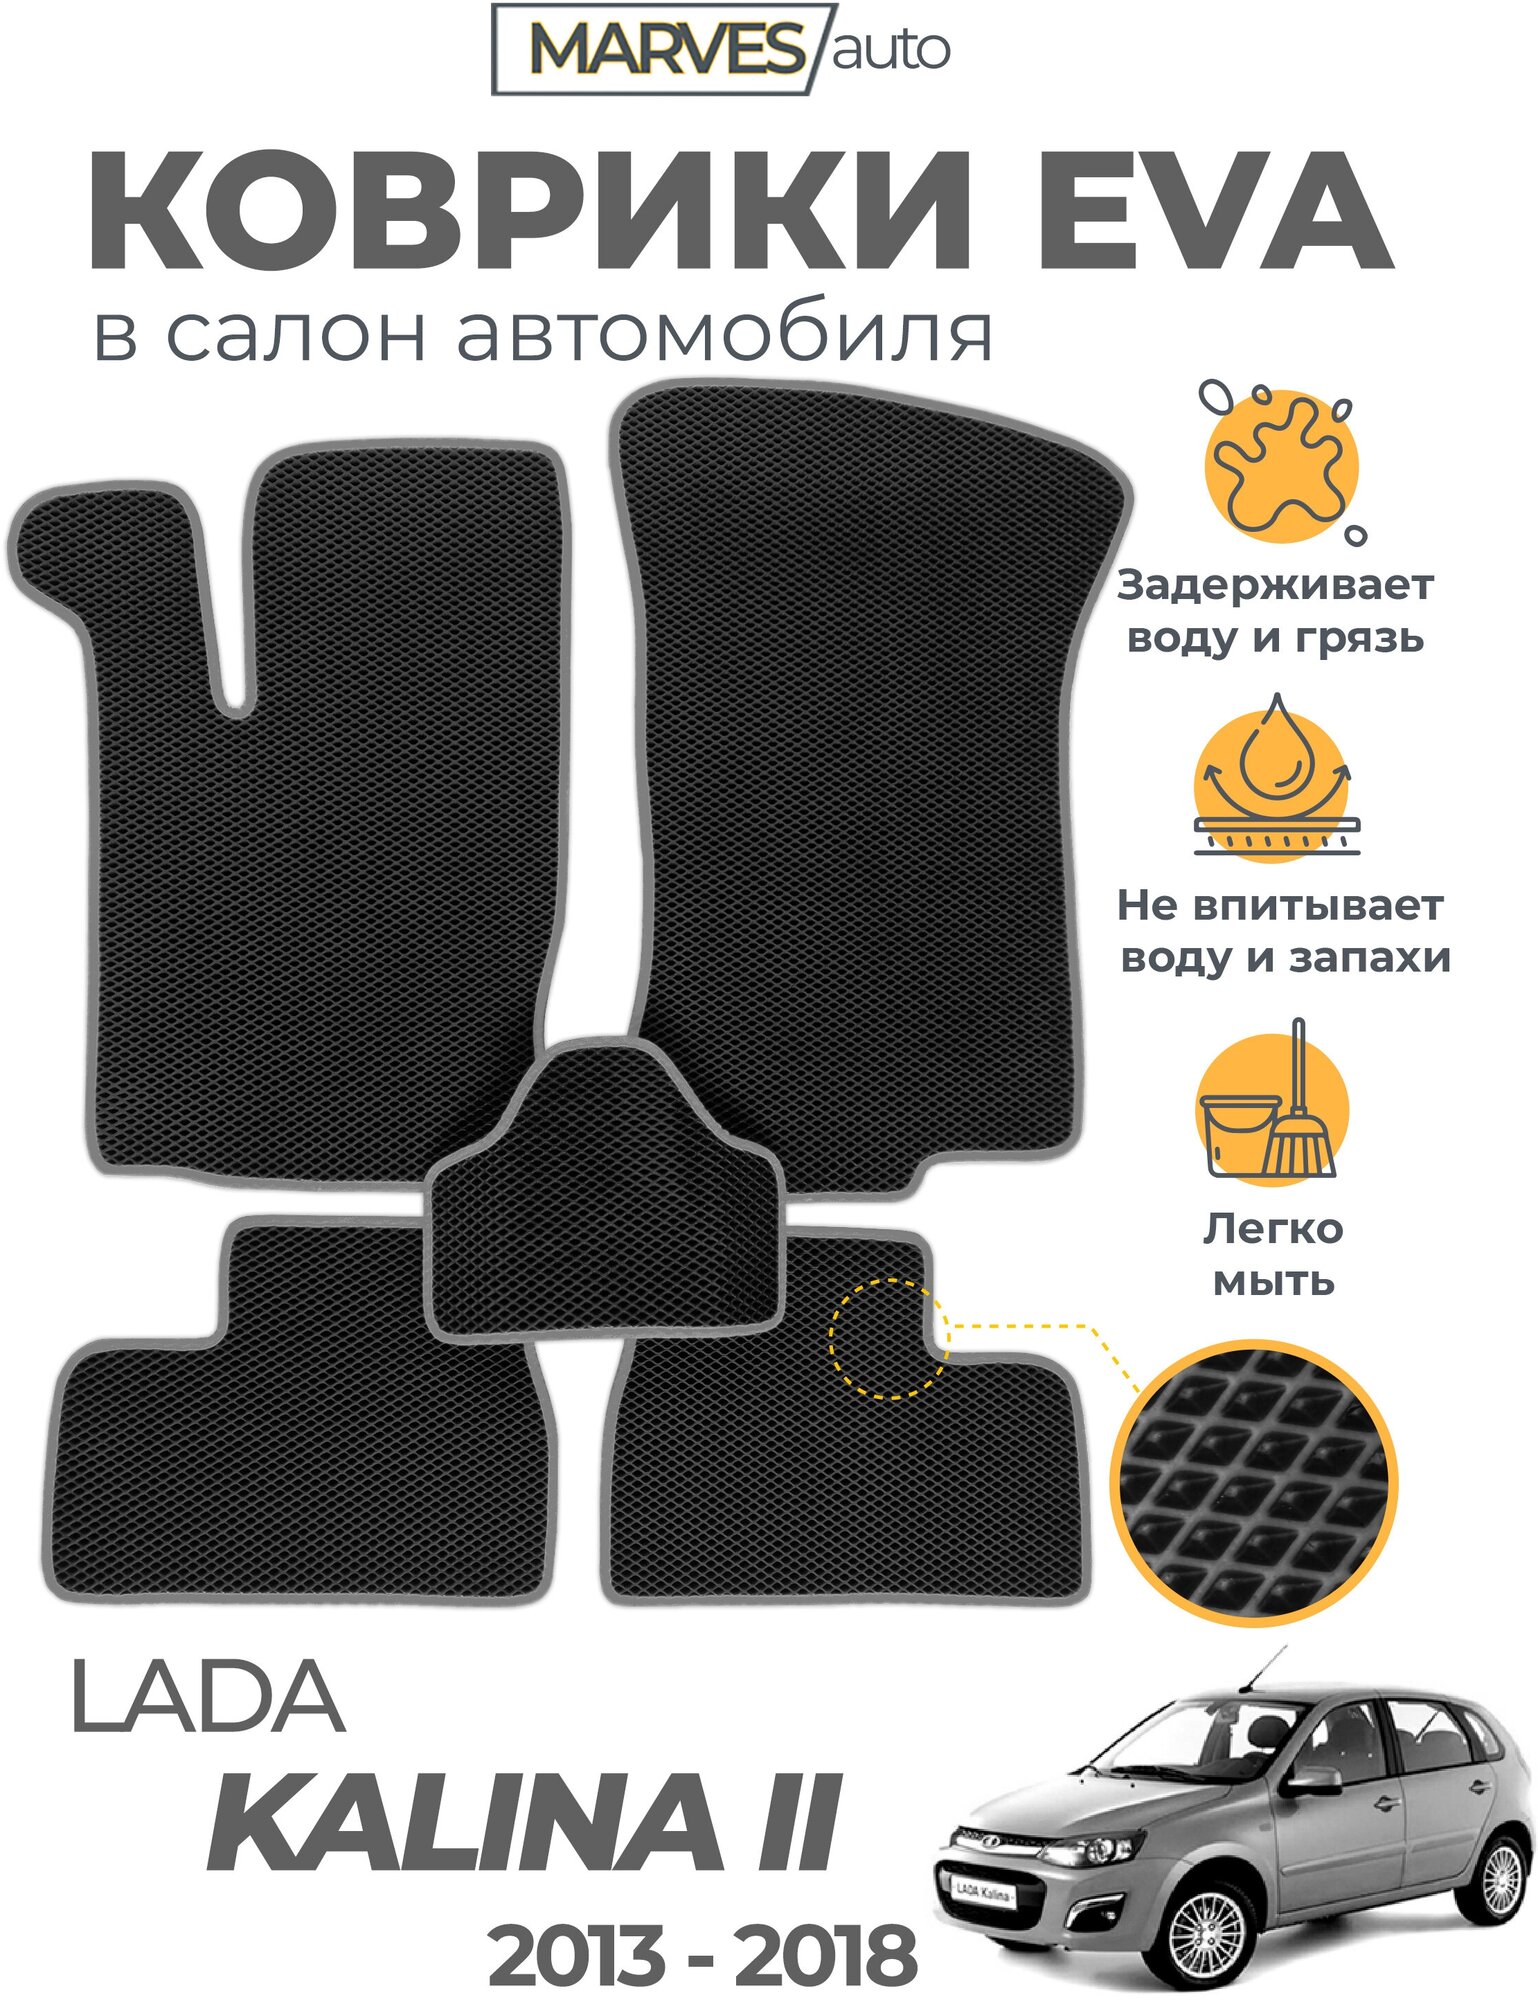 Коврики EVA (ЭВА, ЕВА) в салон автомобиля Лада Калина II 2014-2018, ВАЗ-2192, 2194, комплект 5 шт черный ромб/серый кант